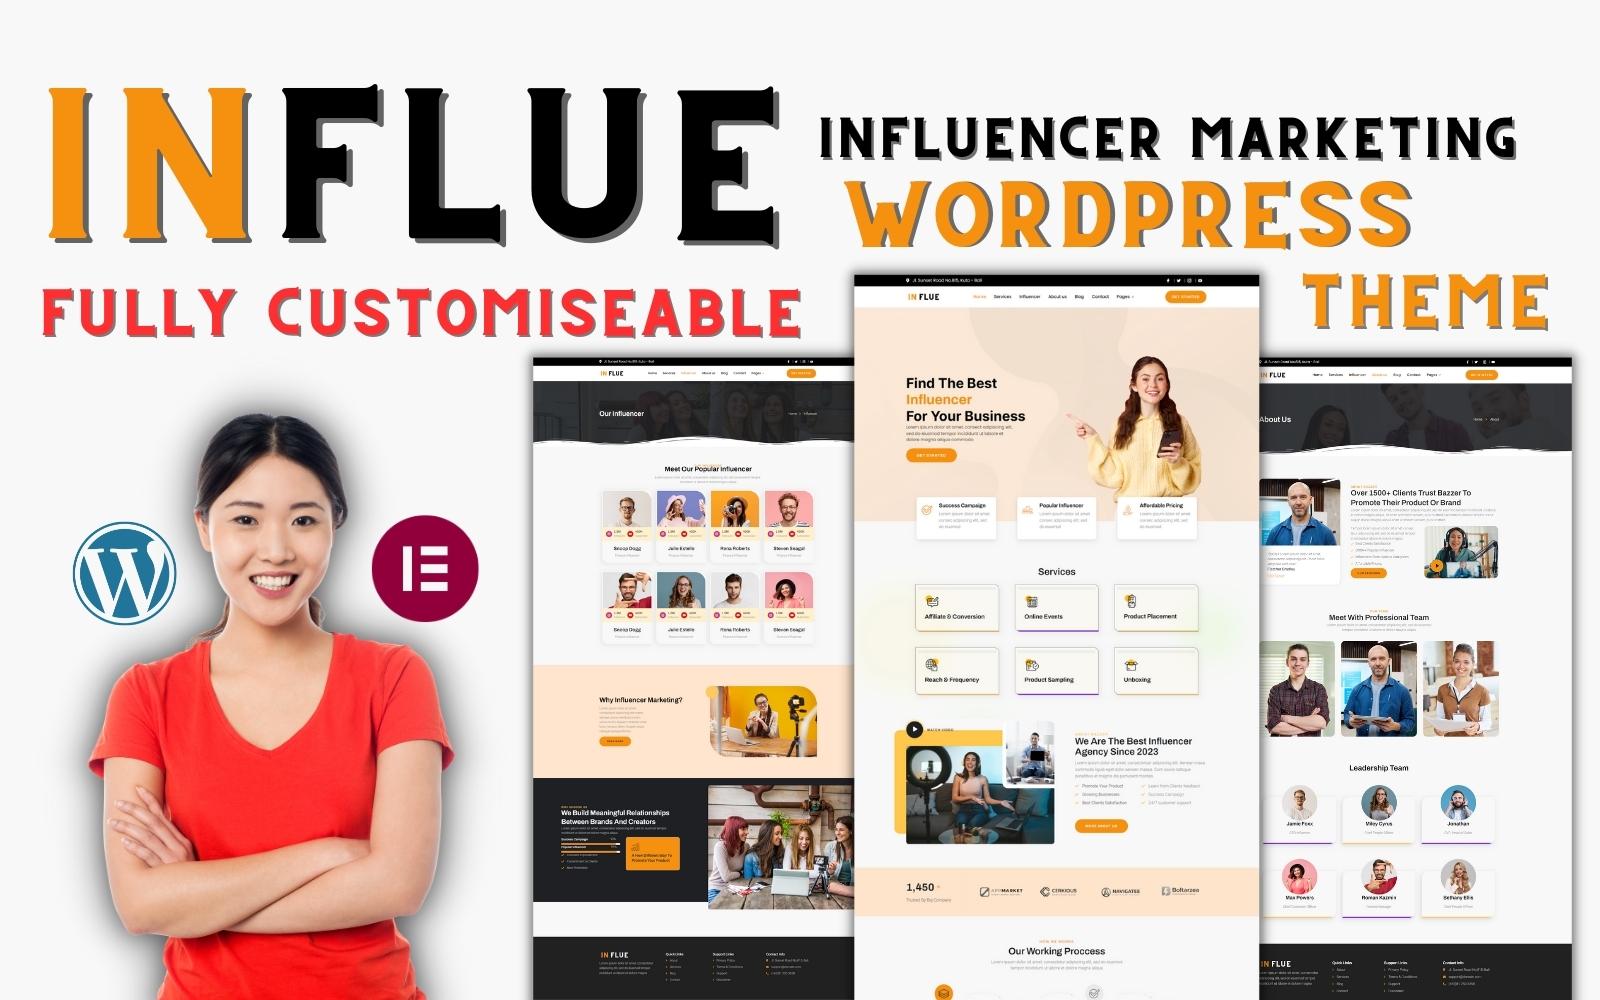 Influe - A Premium WordPress Theme For Influence Marketing – SEO & Digital Agency